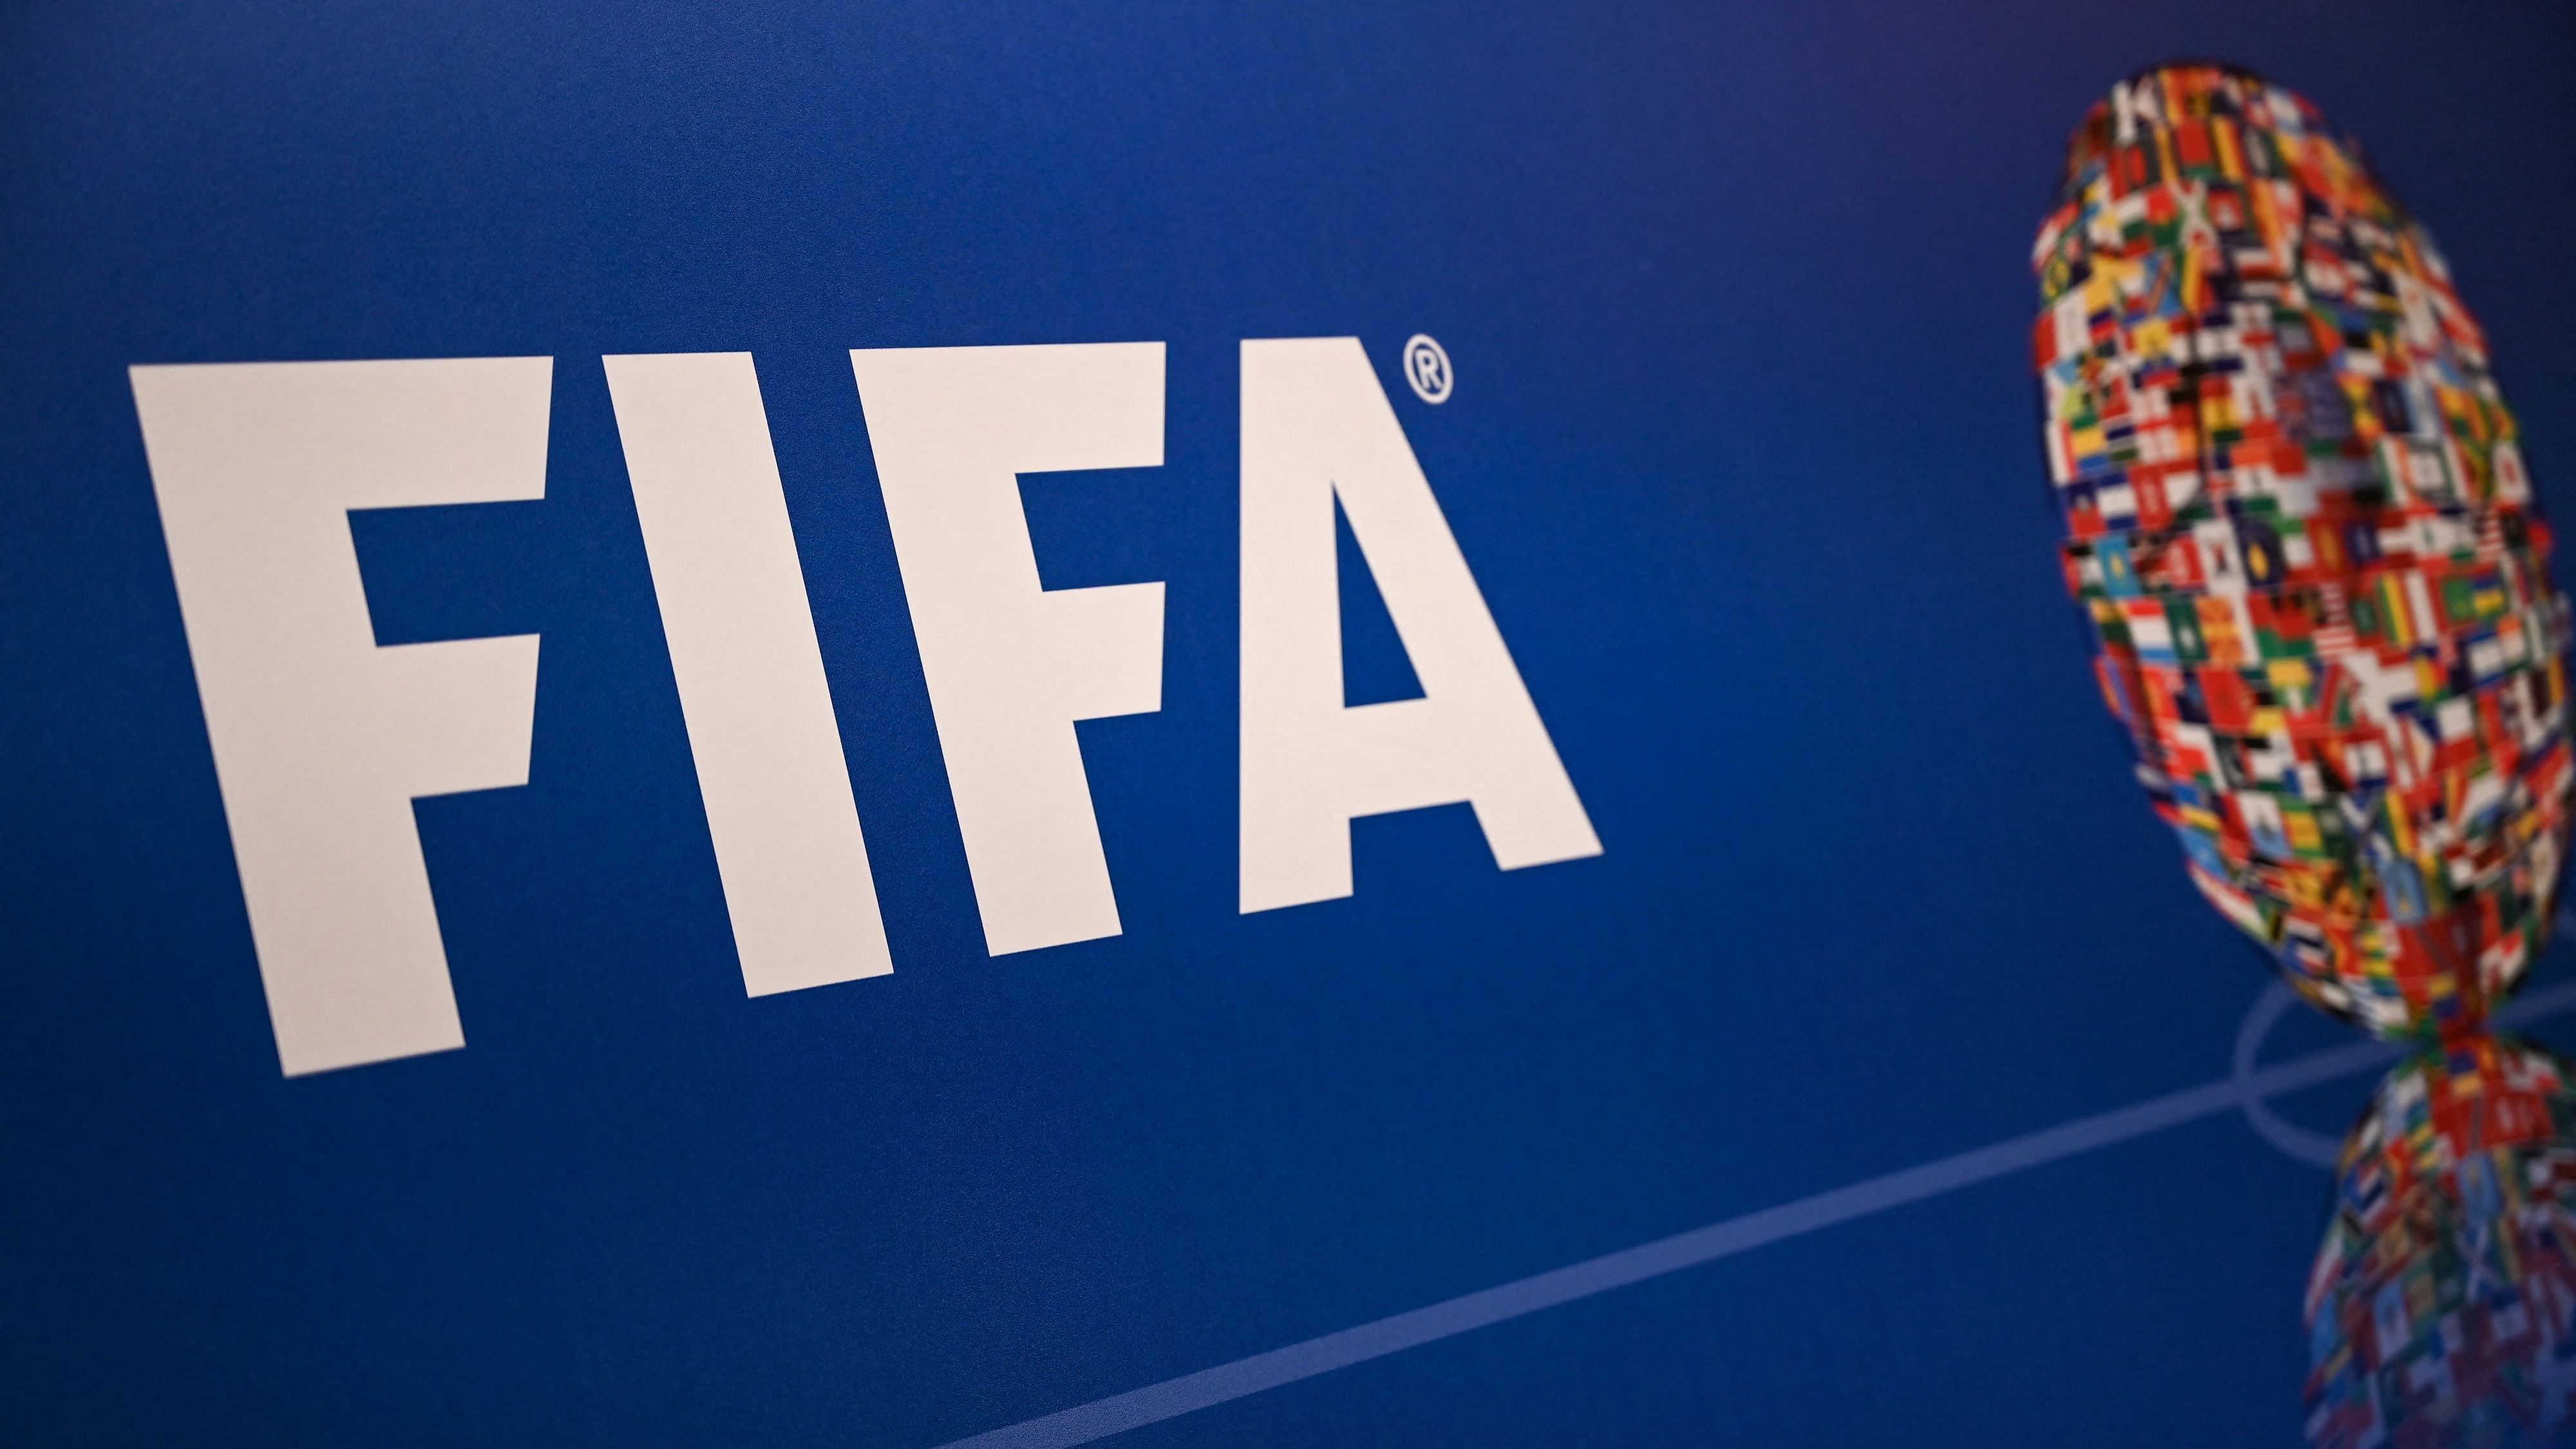 FIFA logo. Credit: AFP